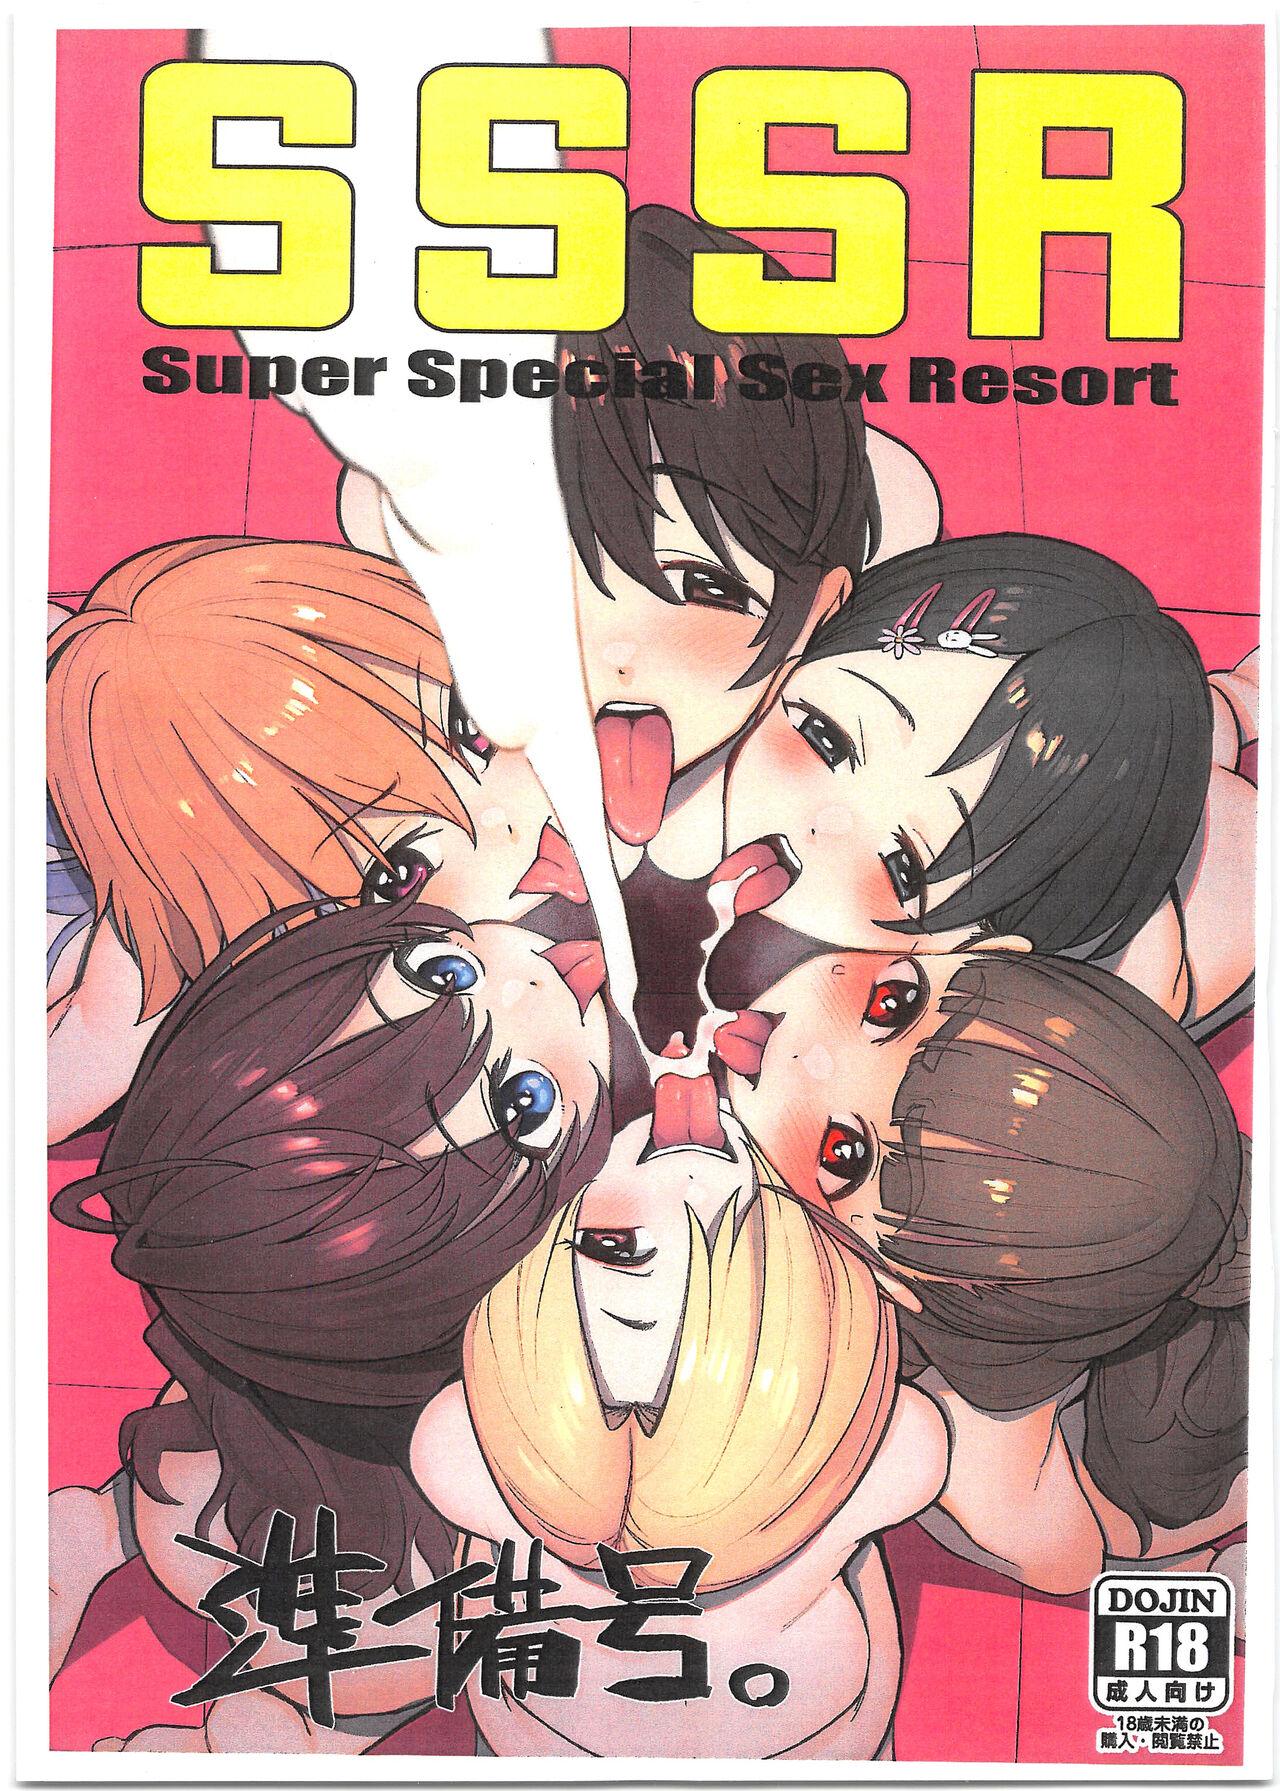 SSSR Super Special Sex Resort Junbigou. 0